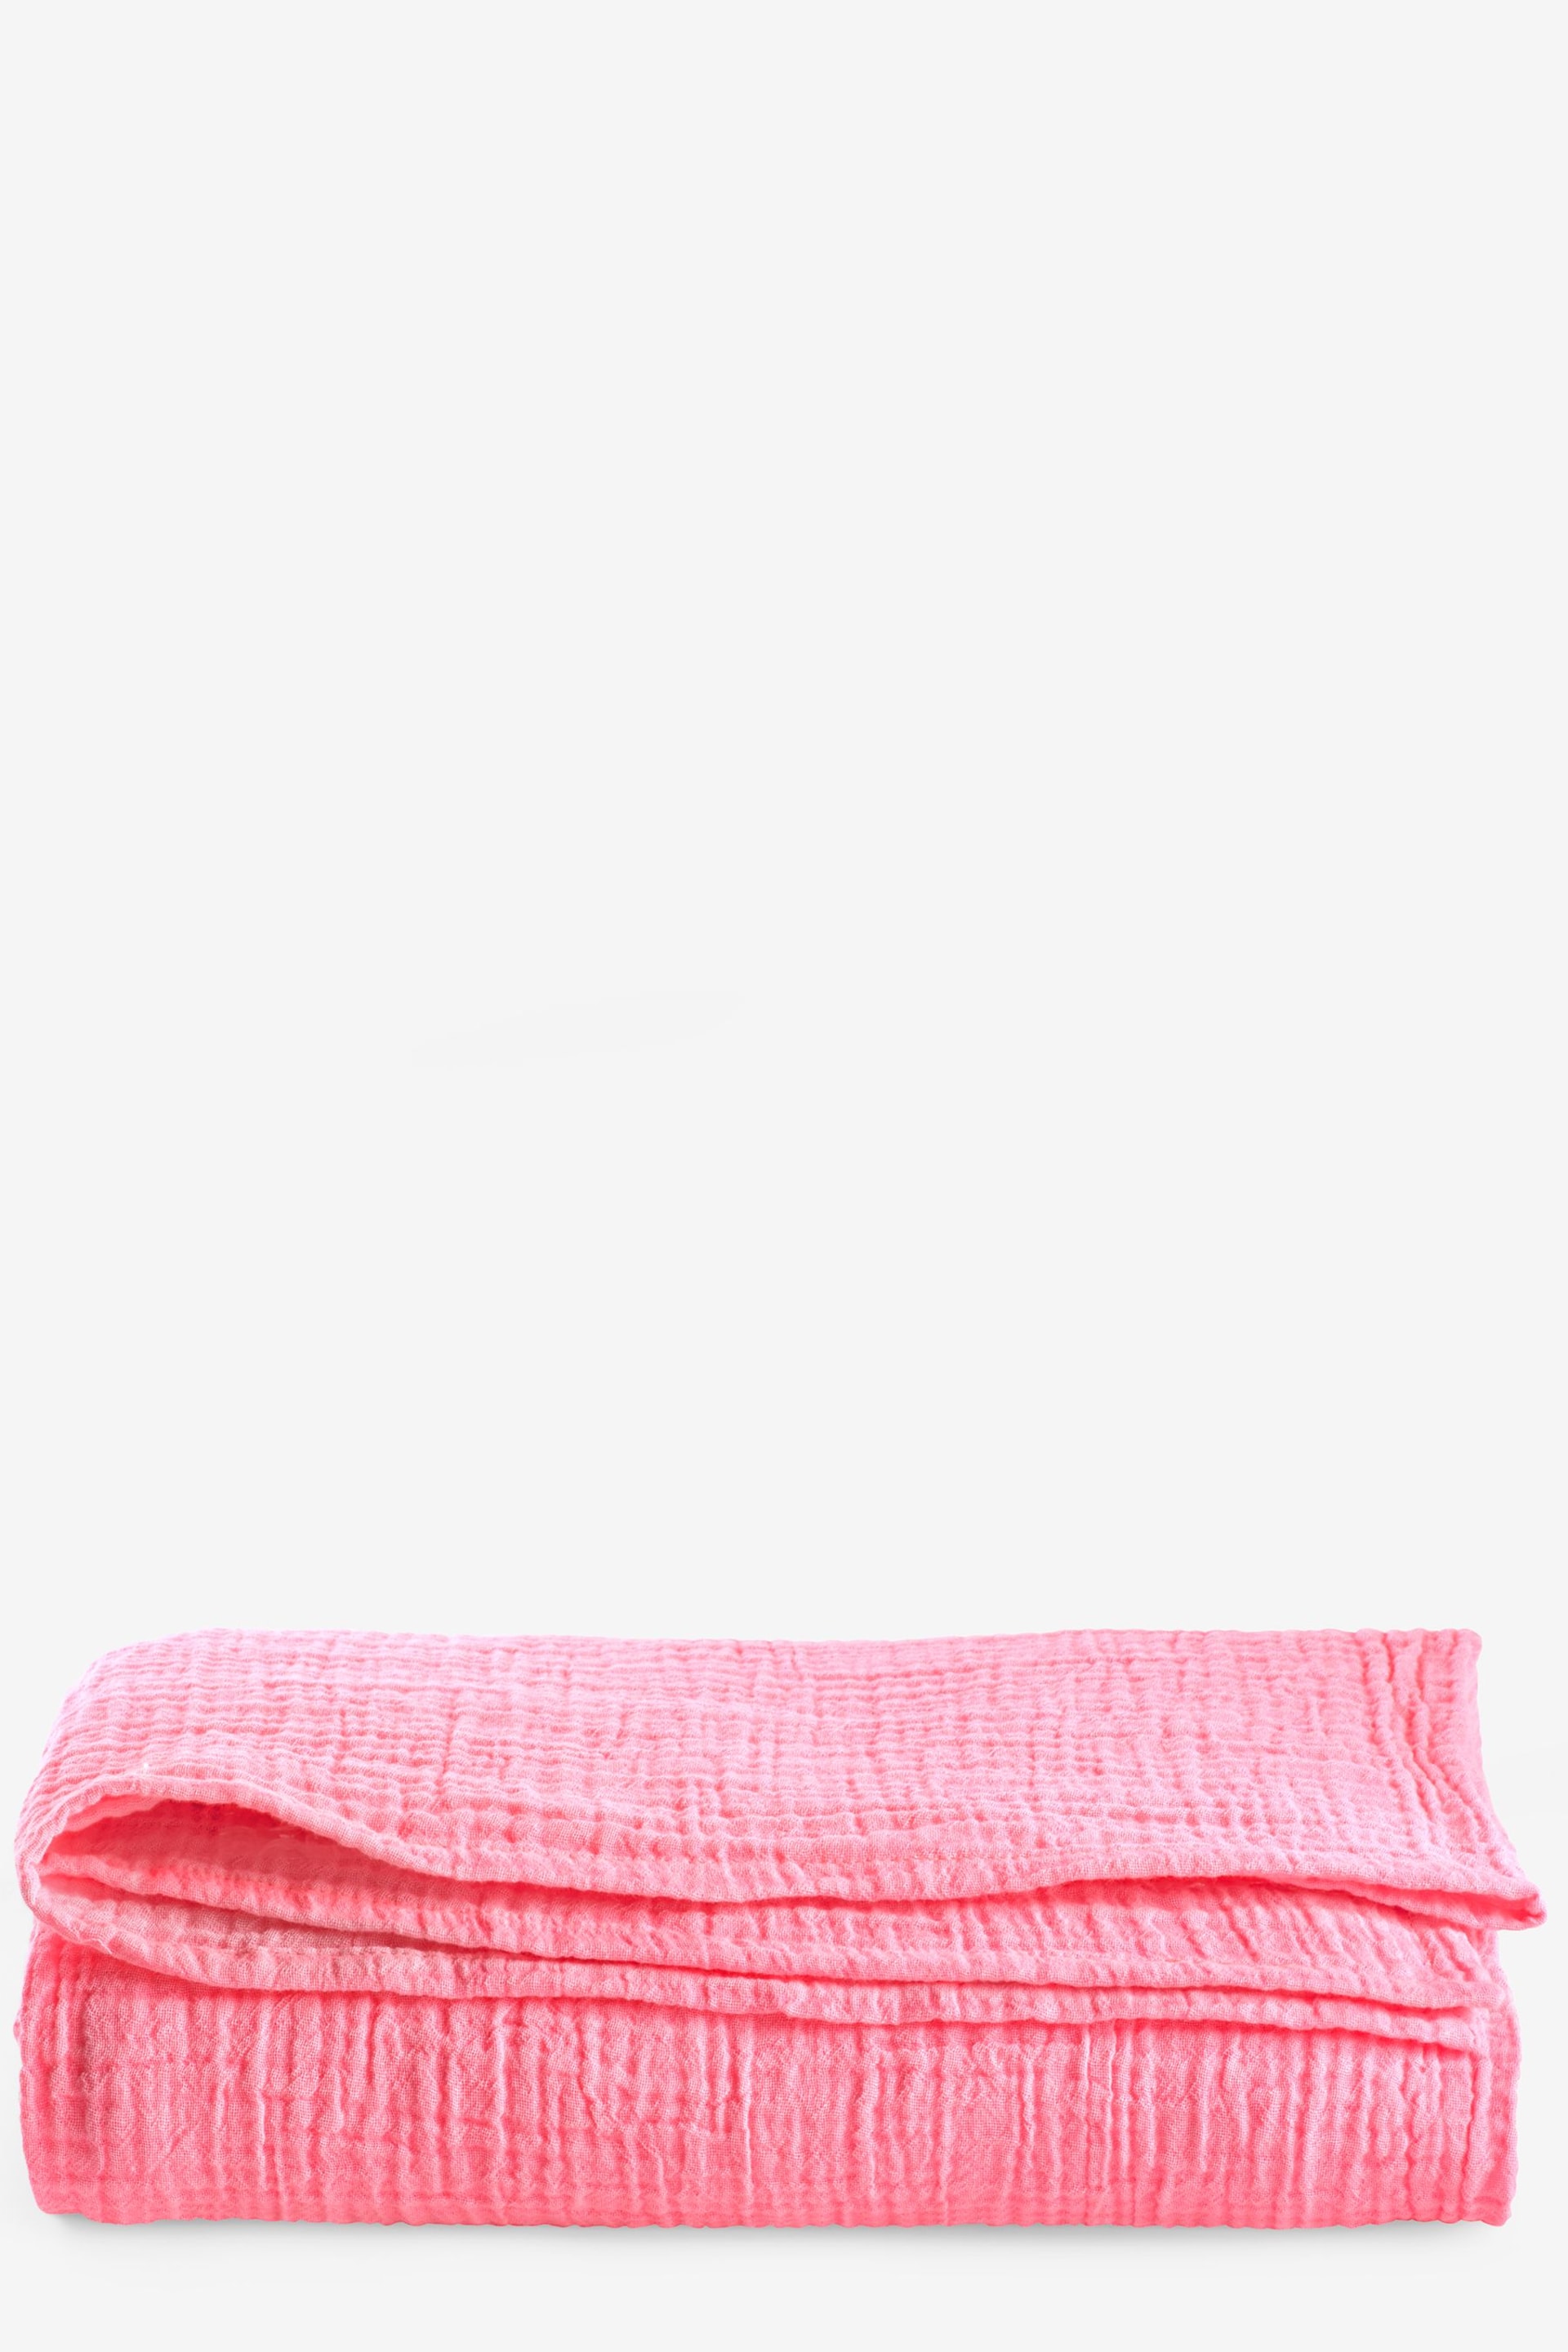 Neon Pink Crinkle Cotton Muslin Lightweight Throw - Image 3 of 3